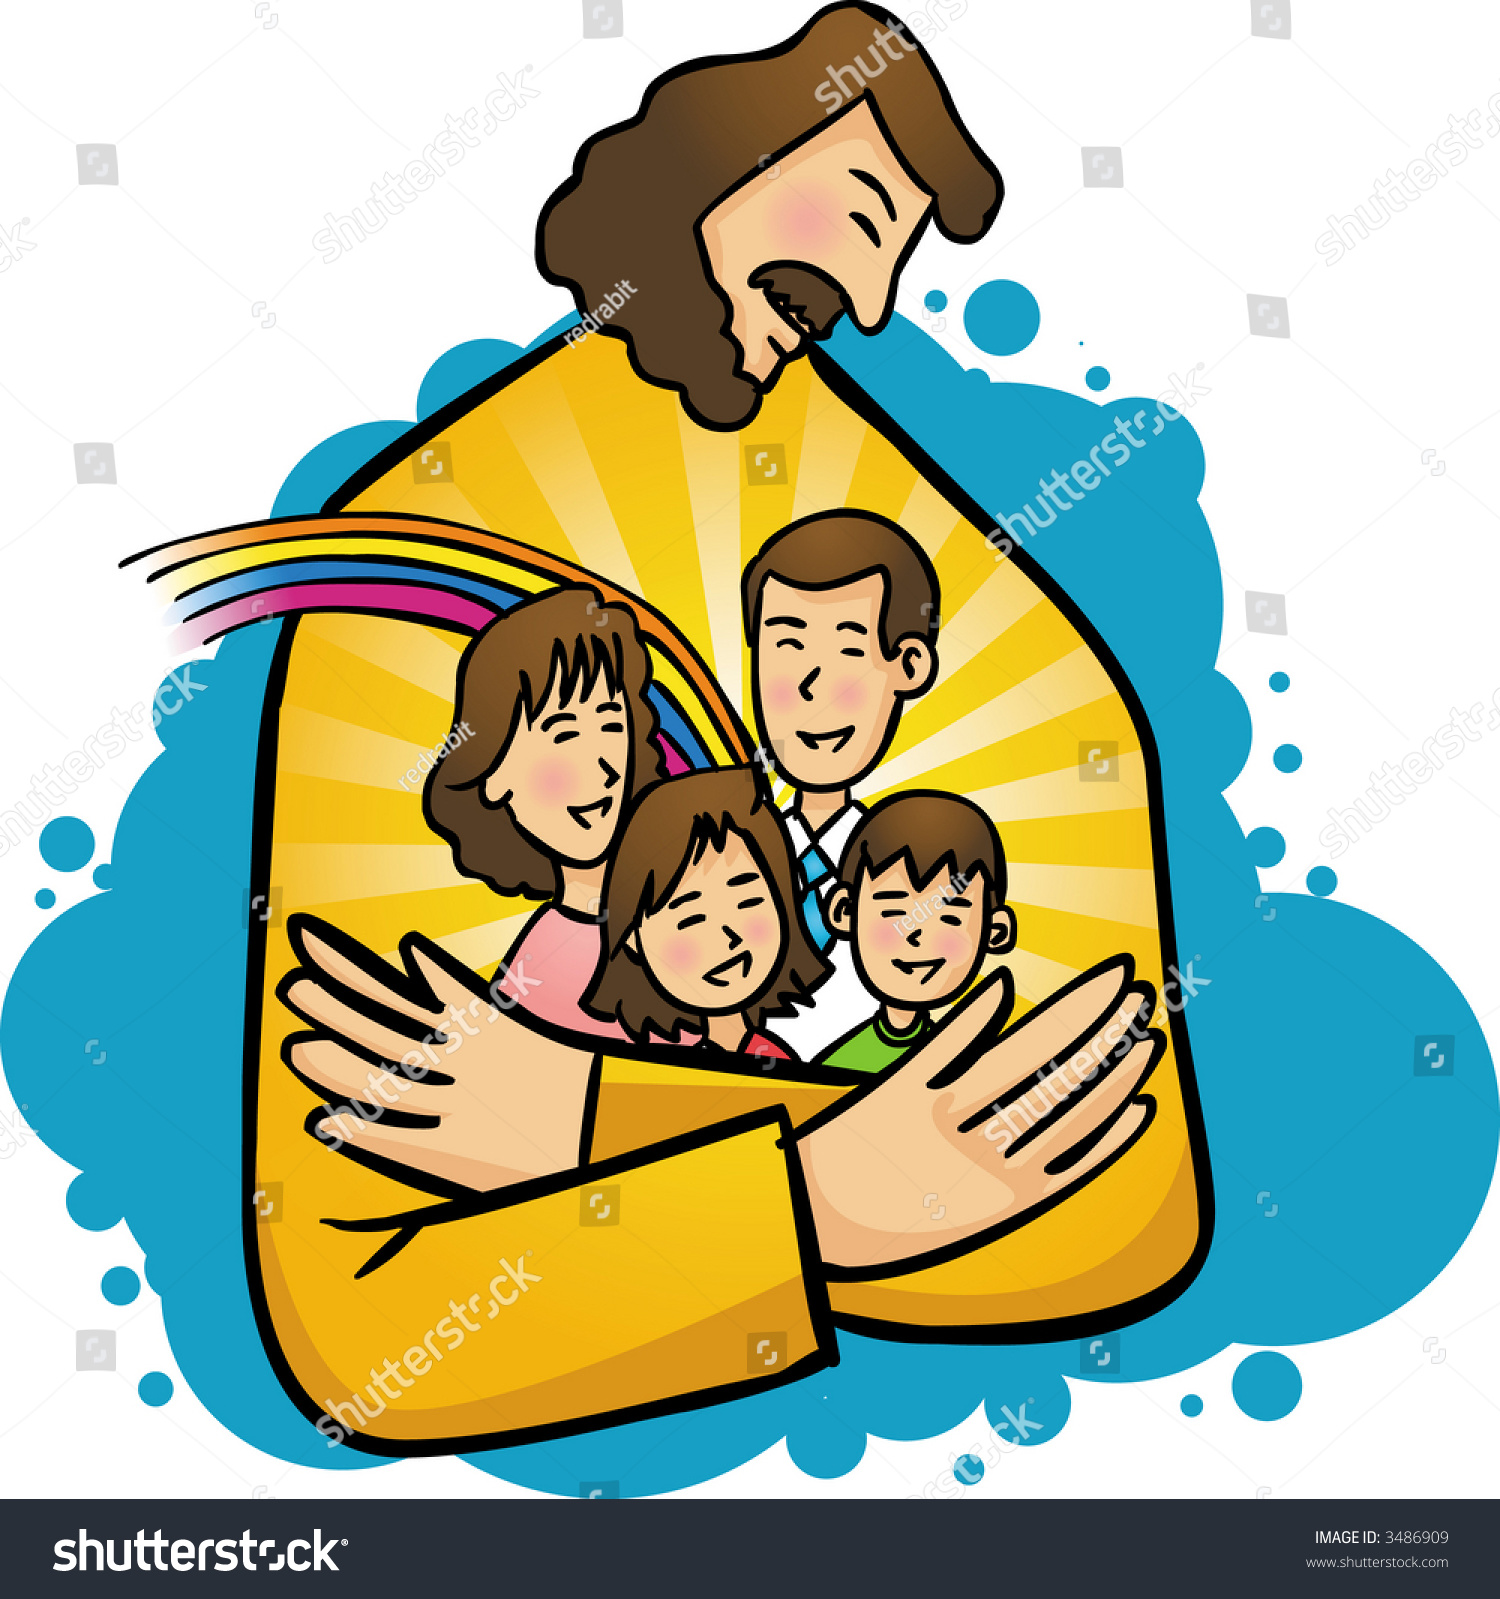 Jesus My Family Stock Vector 3486909 - Shutterstock